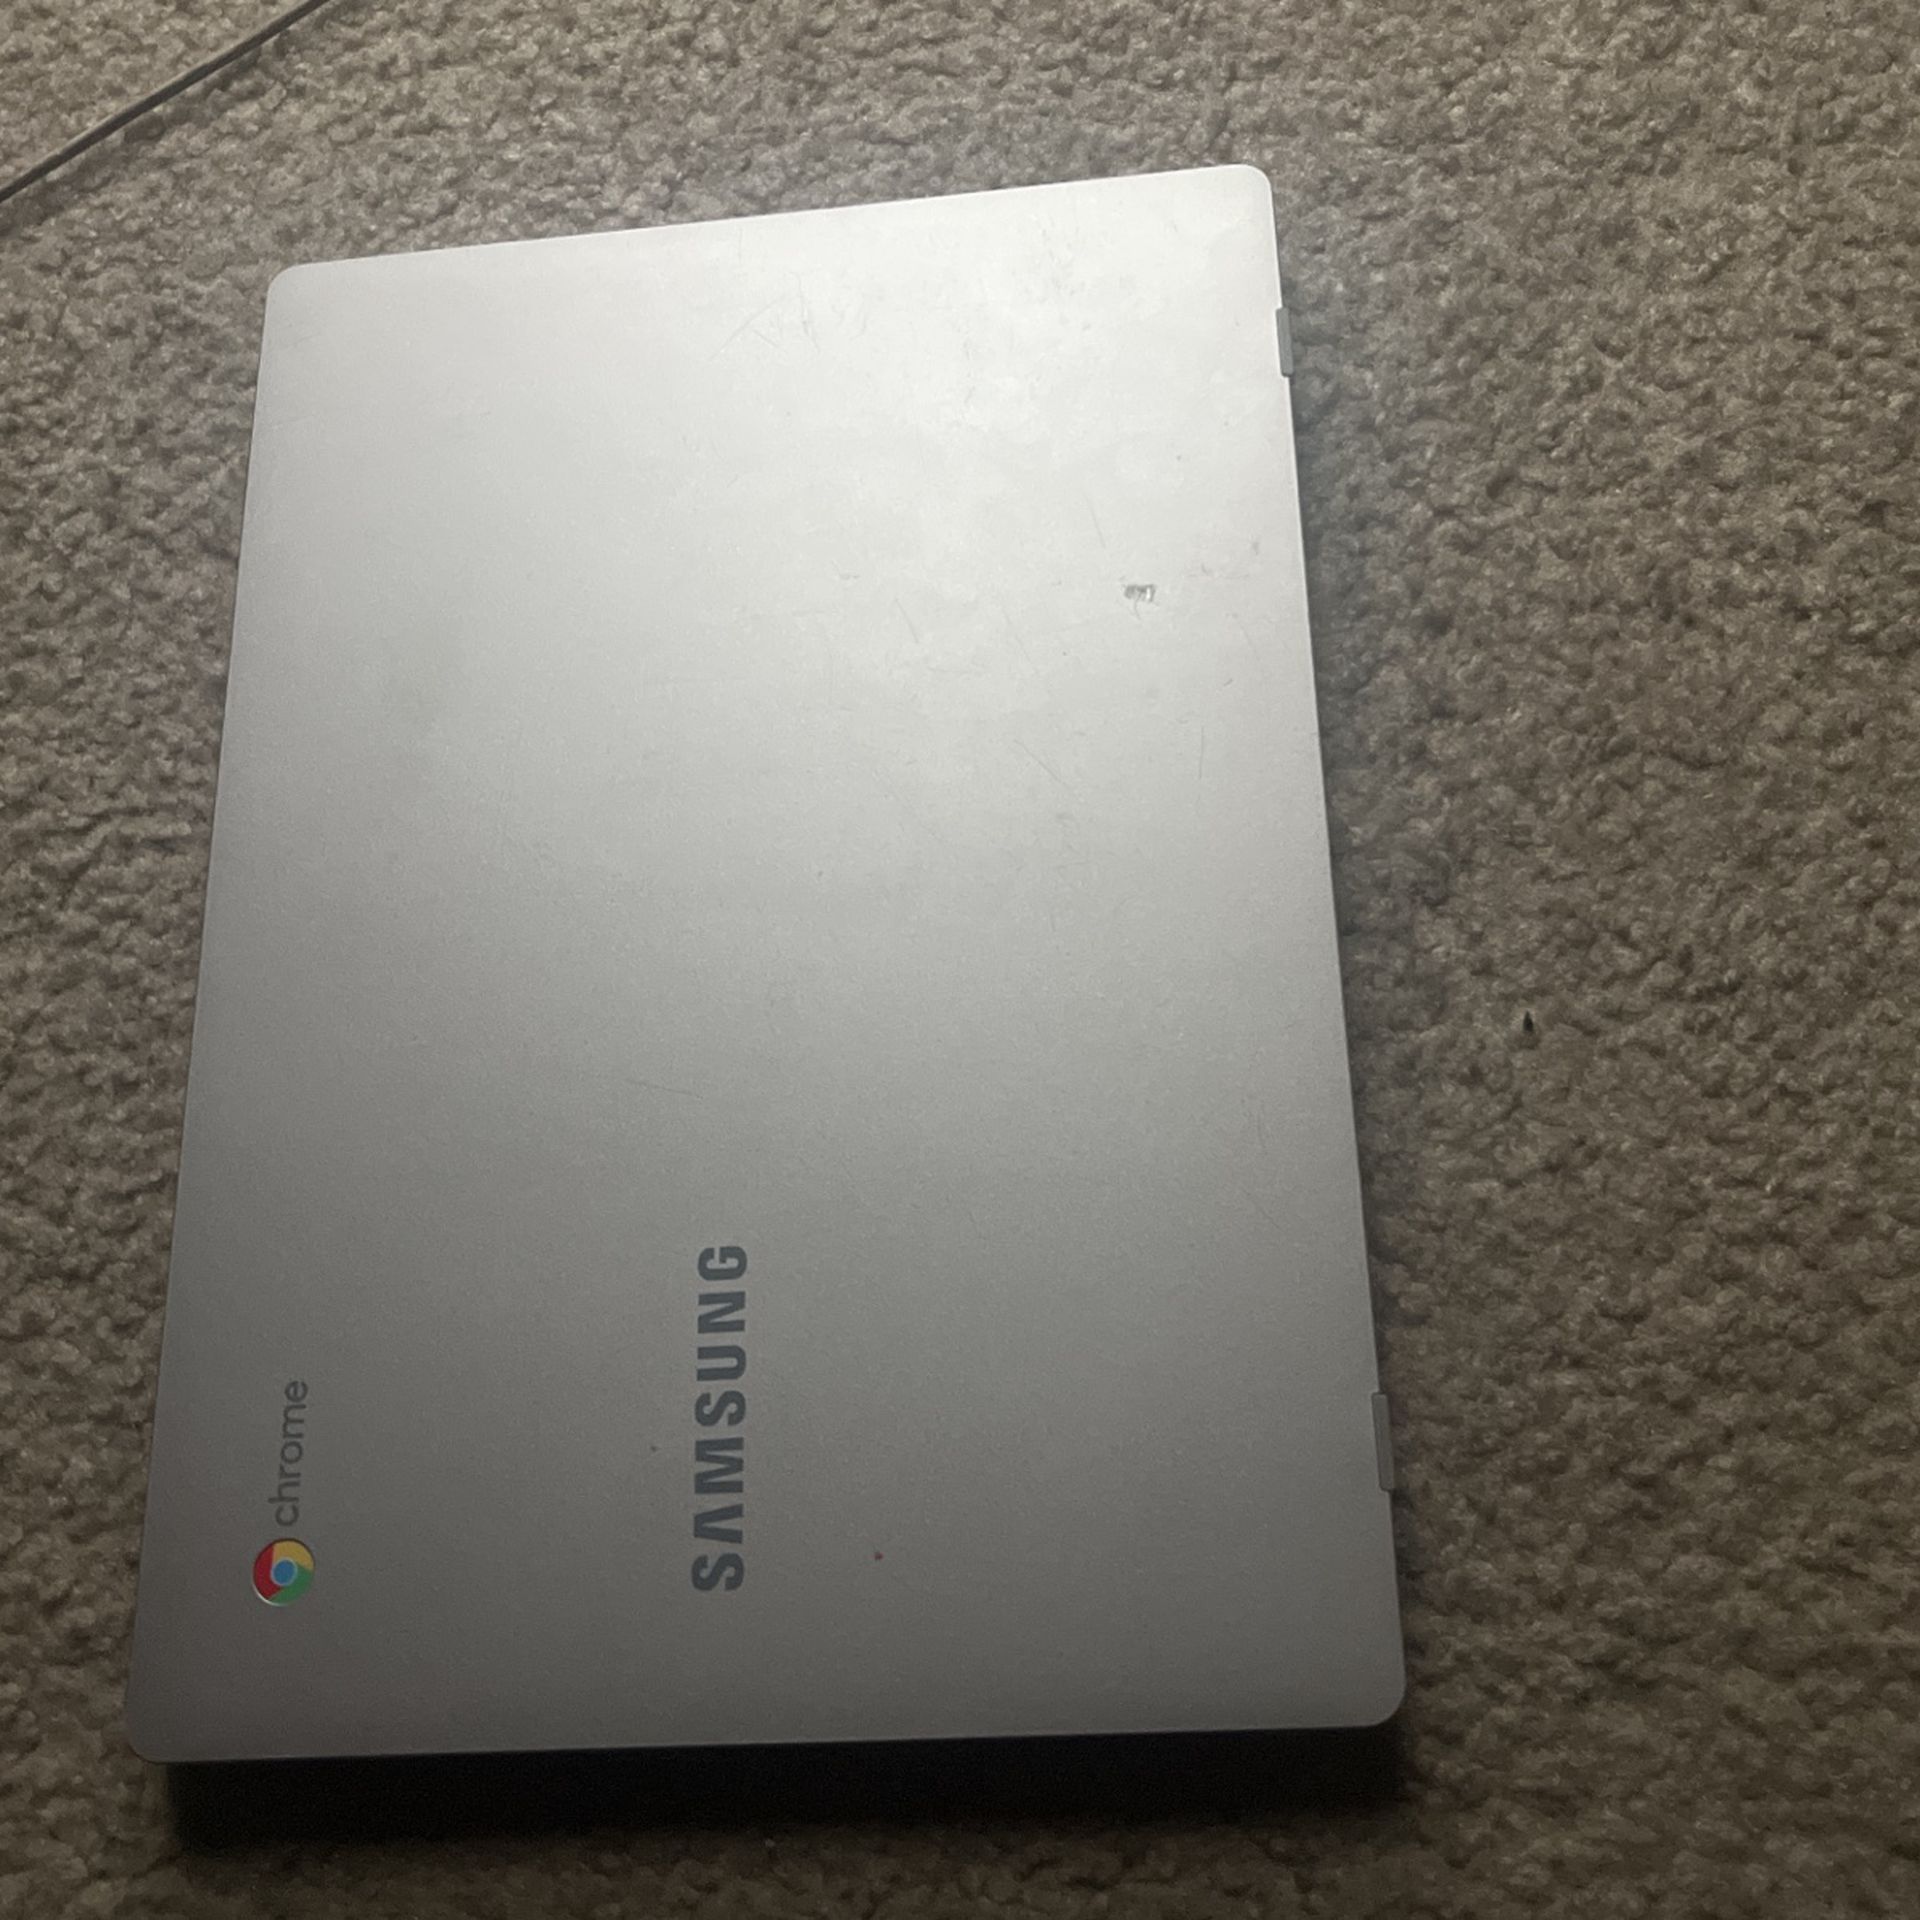 Samsung Chromebook 11.6" 